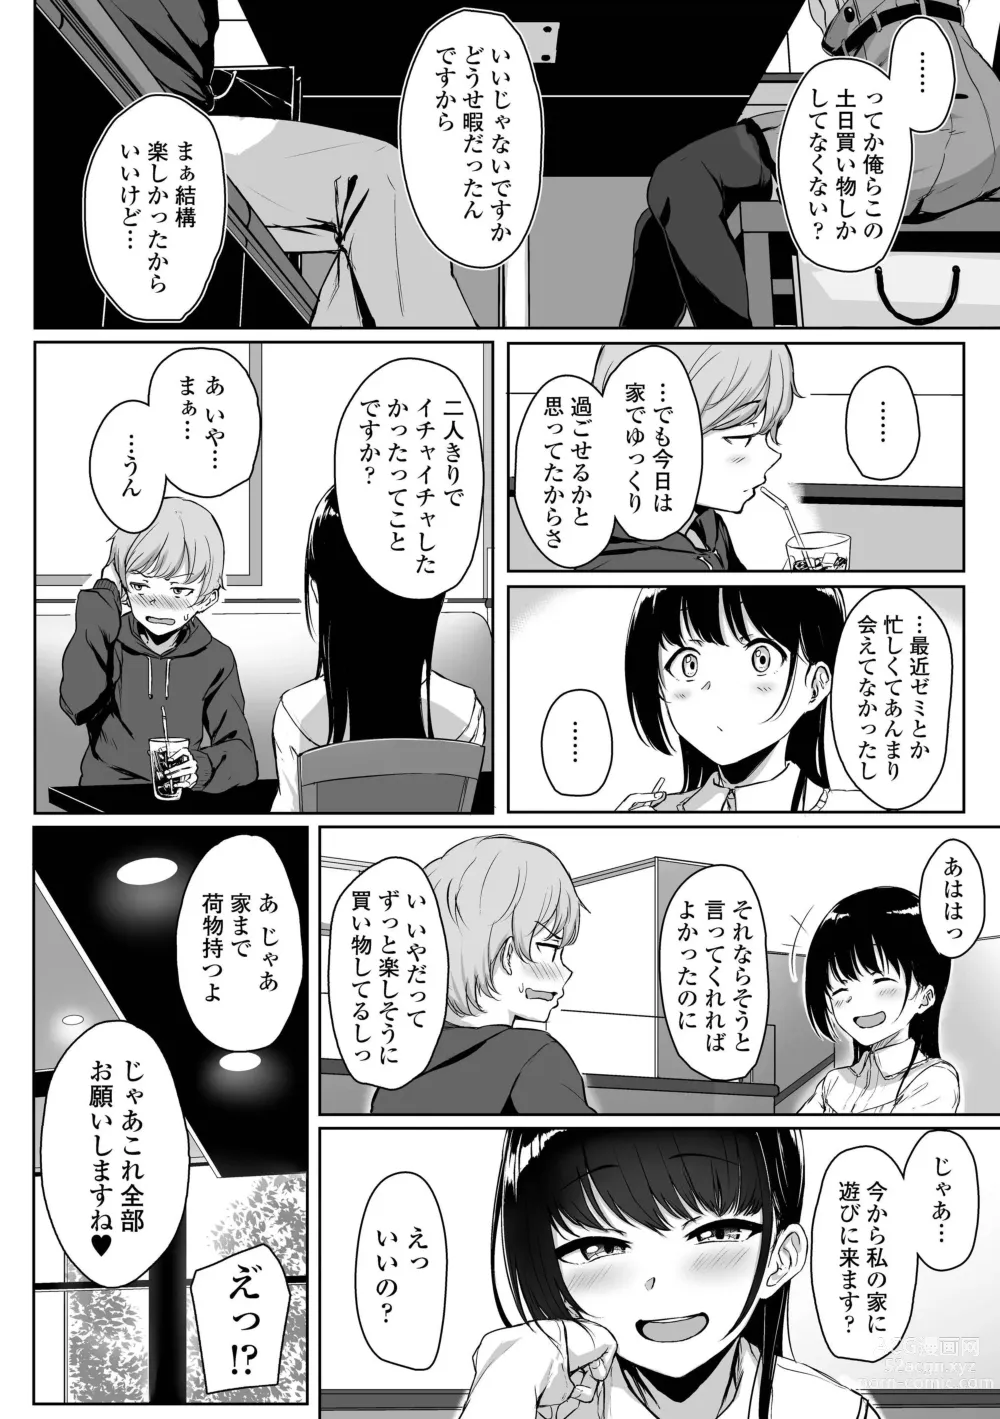 Page 14 of manga Ijiwaru Connect